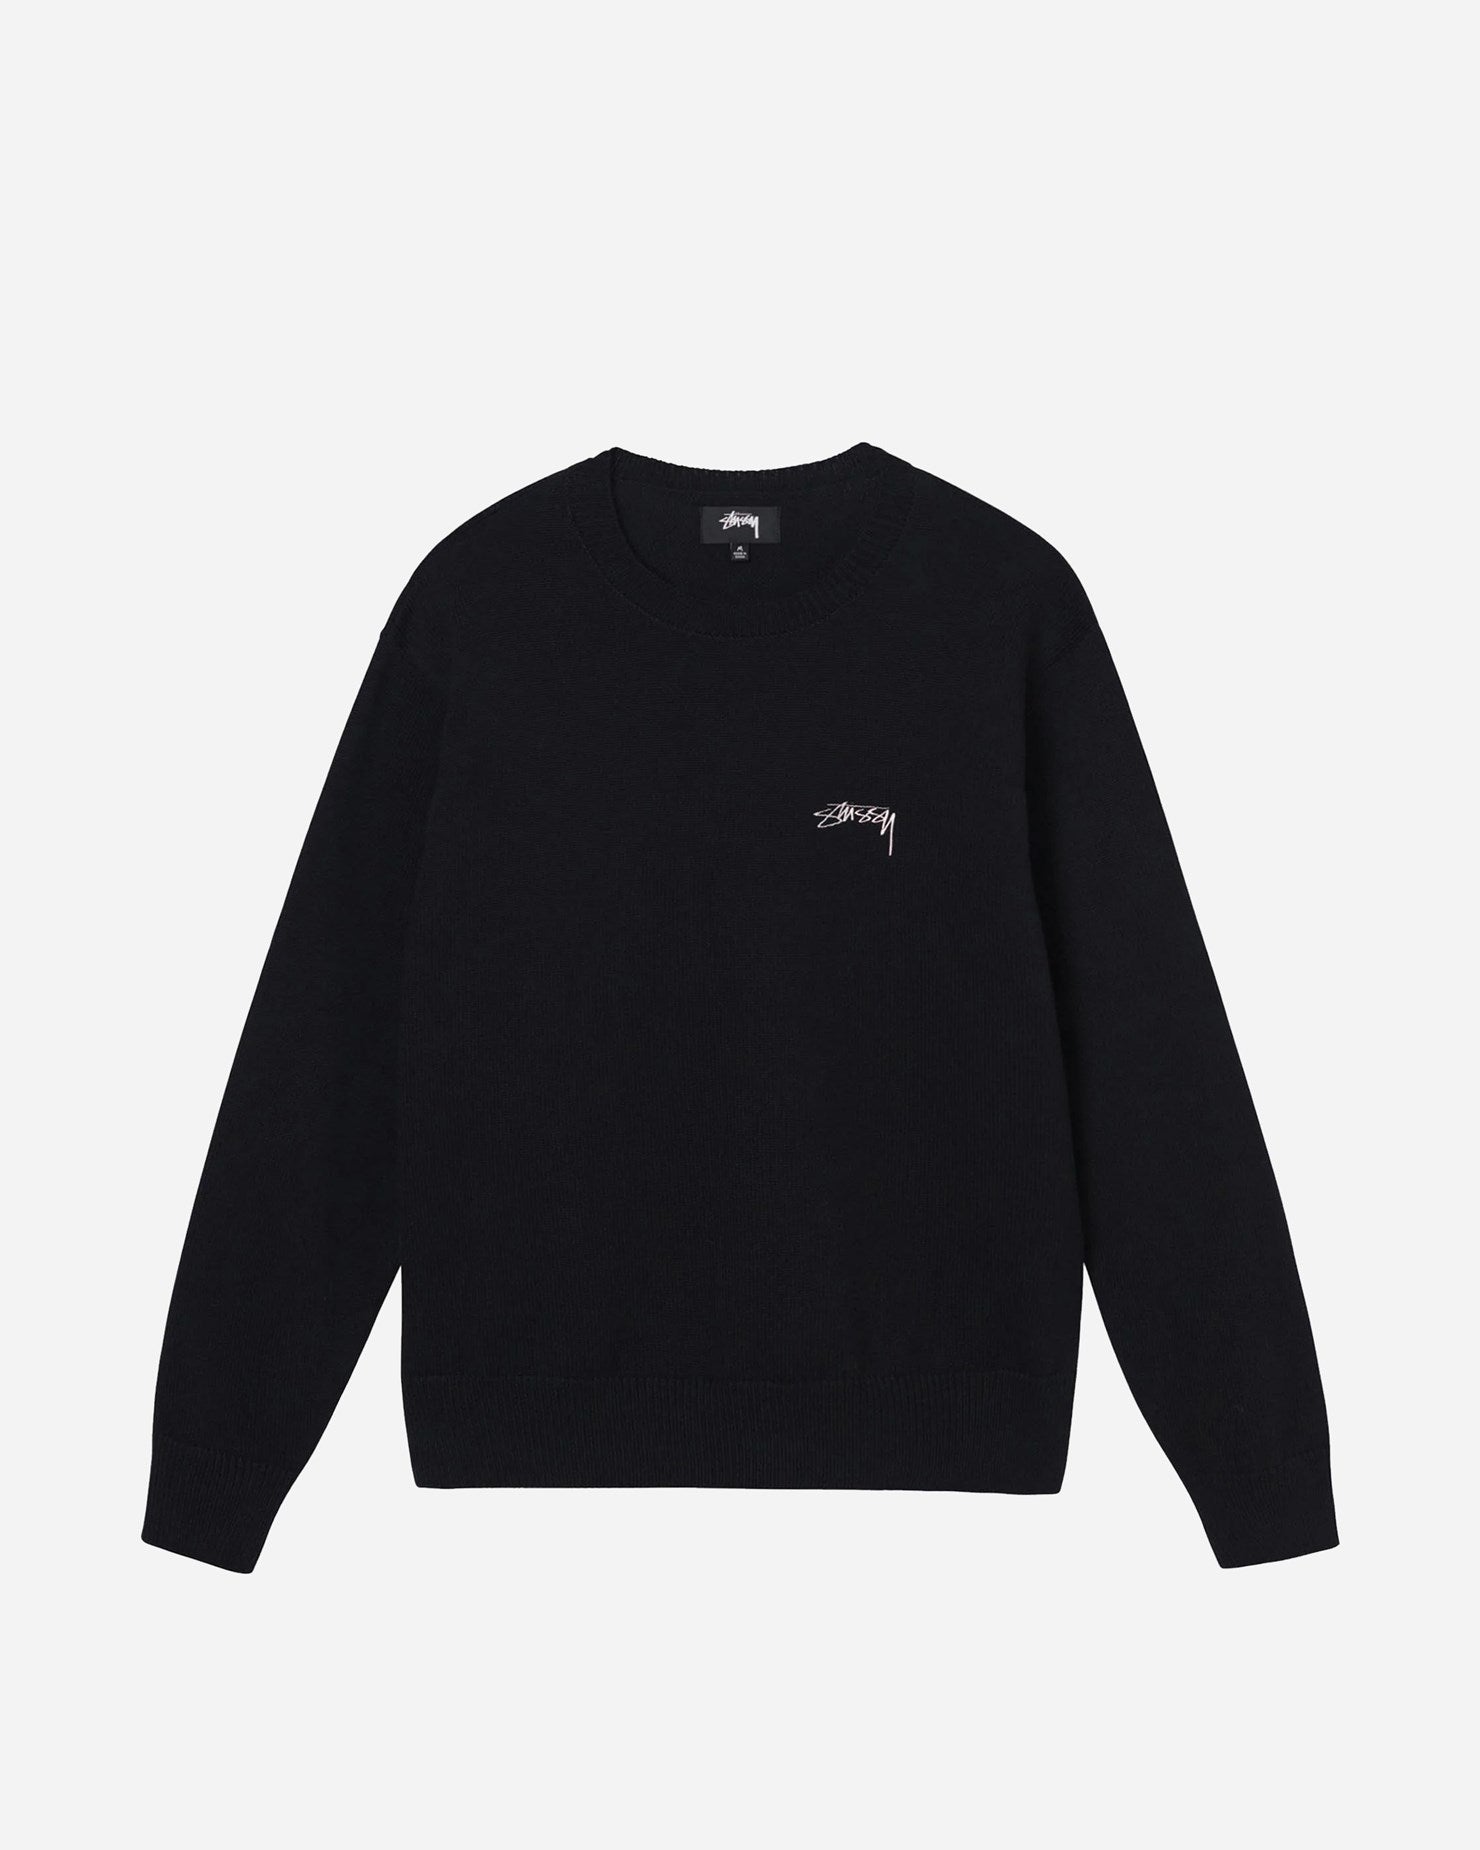 Care Label Sweater Black